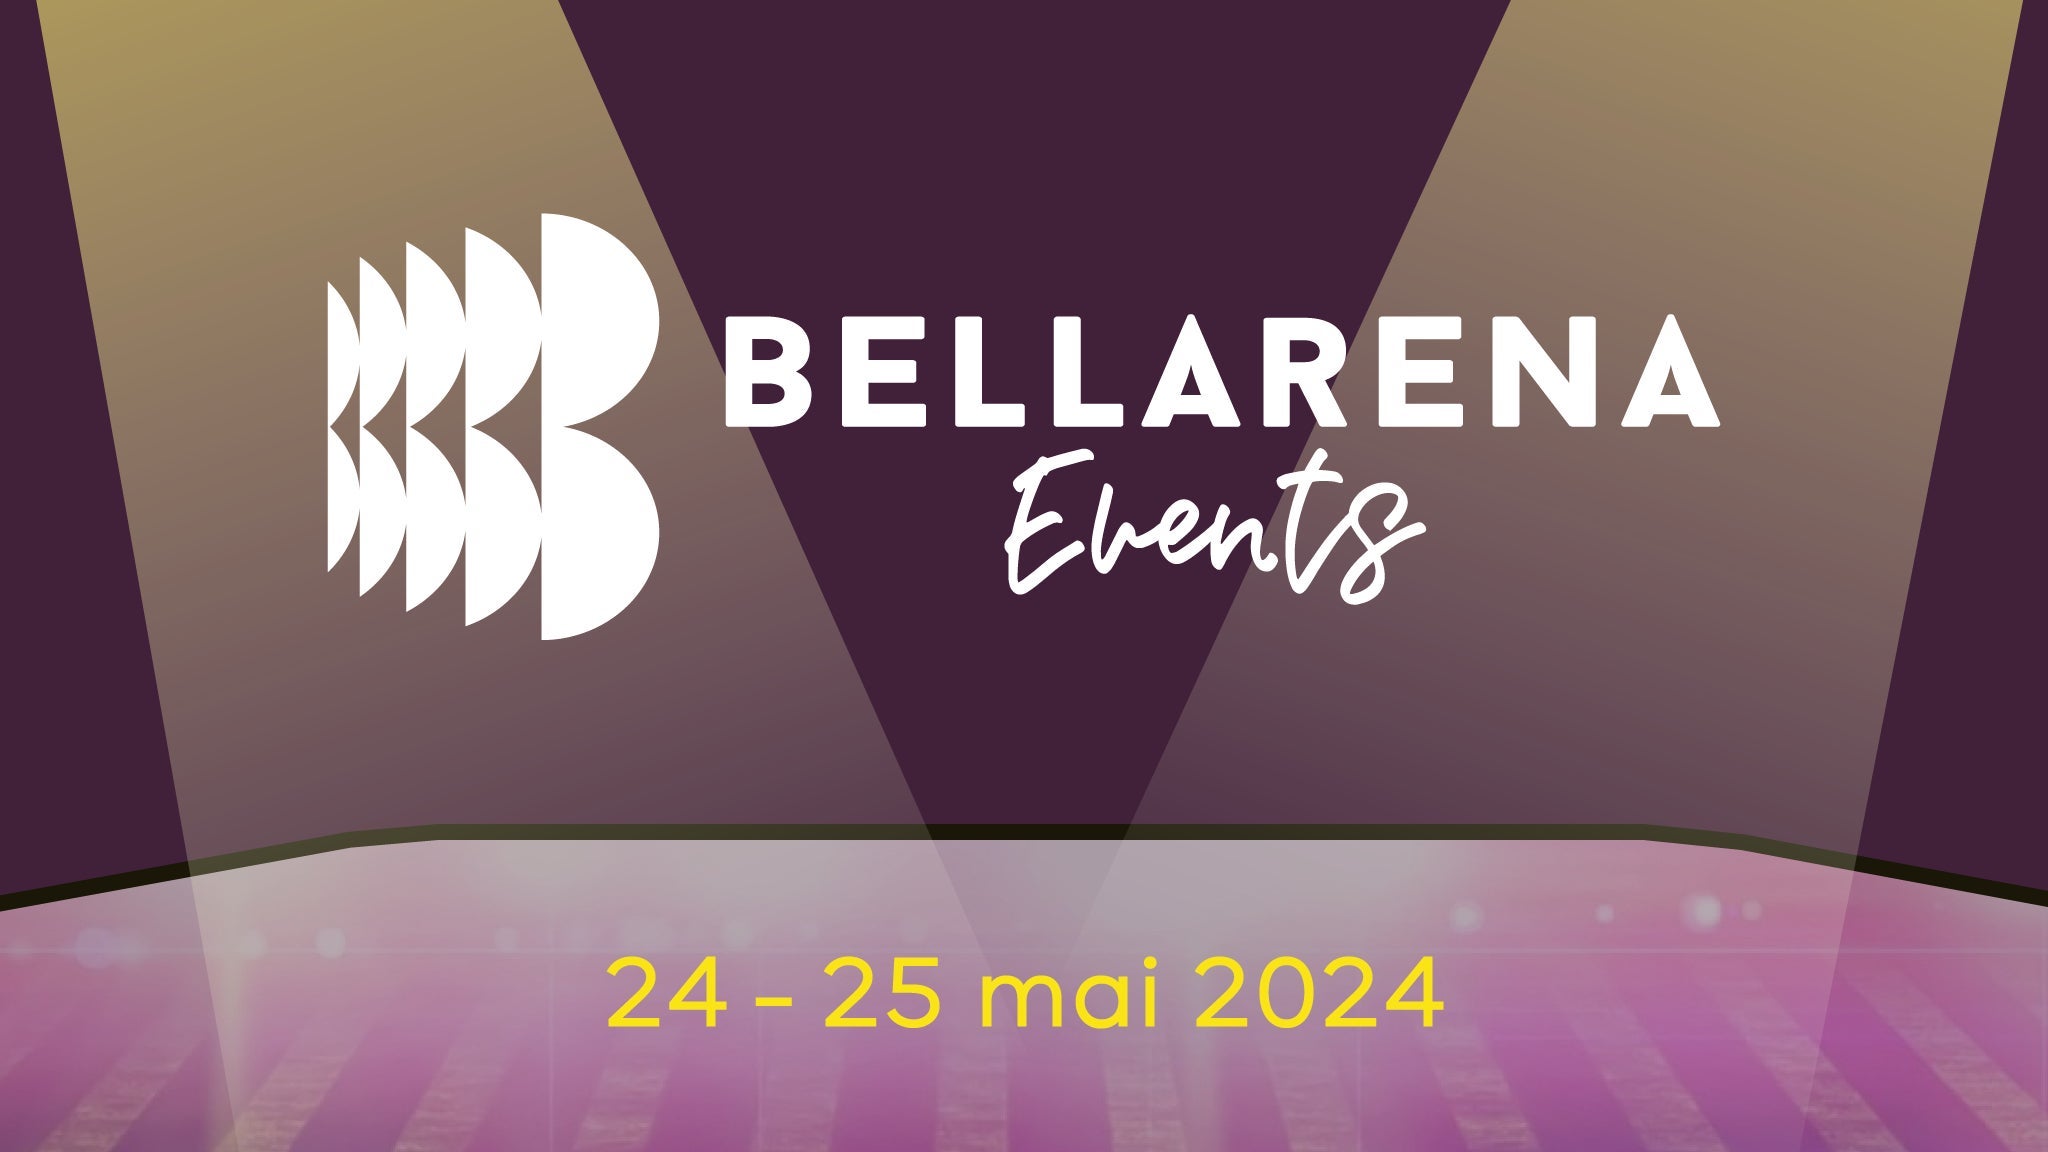 Bellarena Events presale information on freepresalepasswords.com